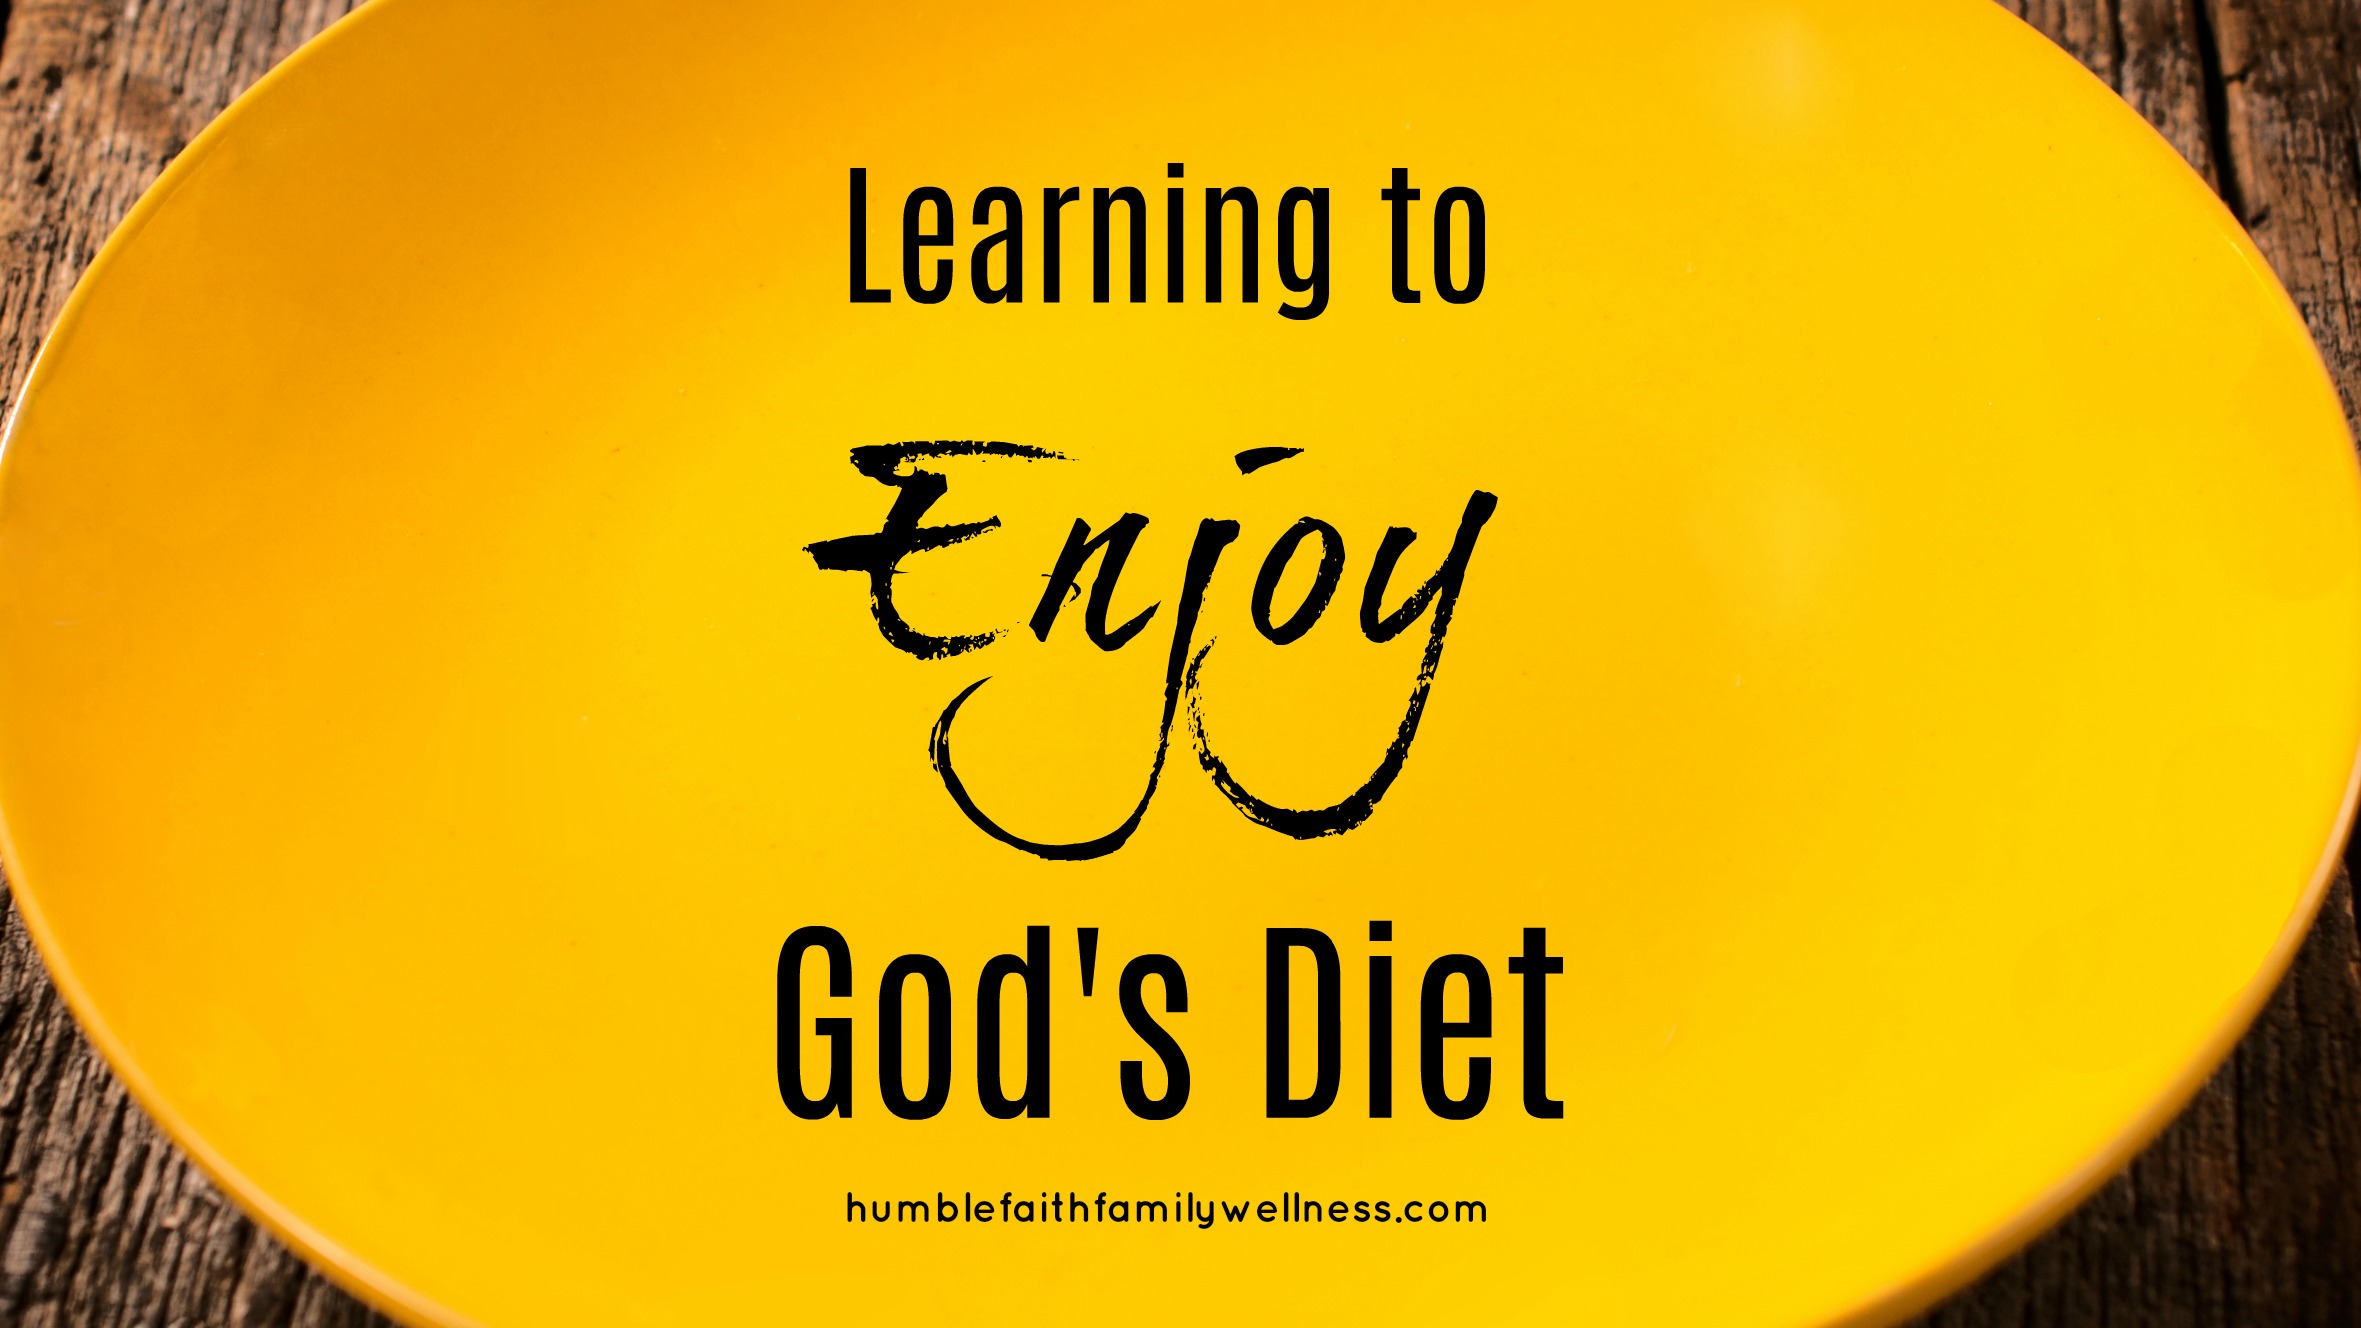 God's diet, Christian health and wellness